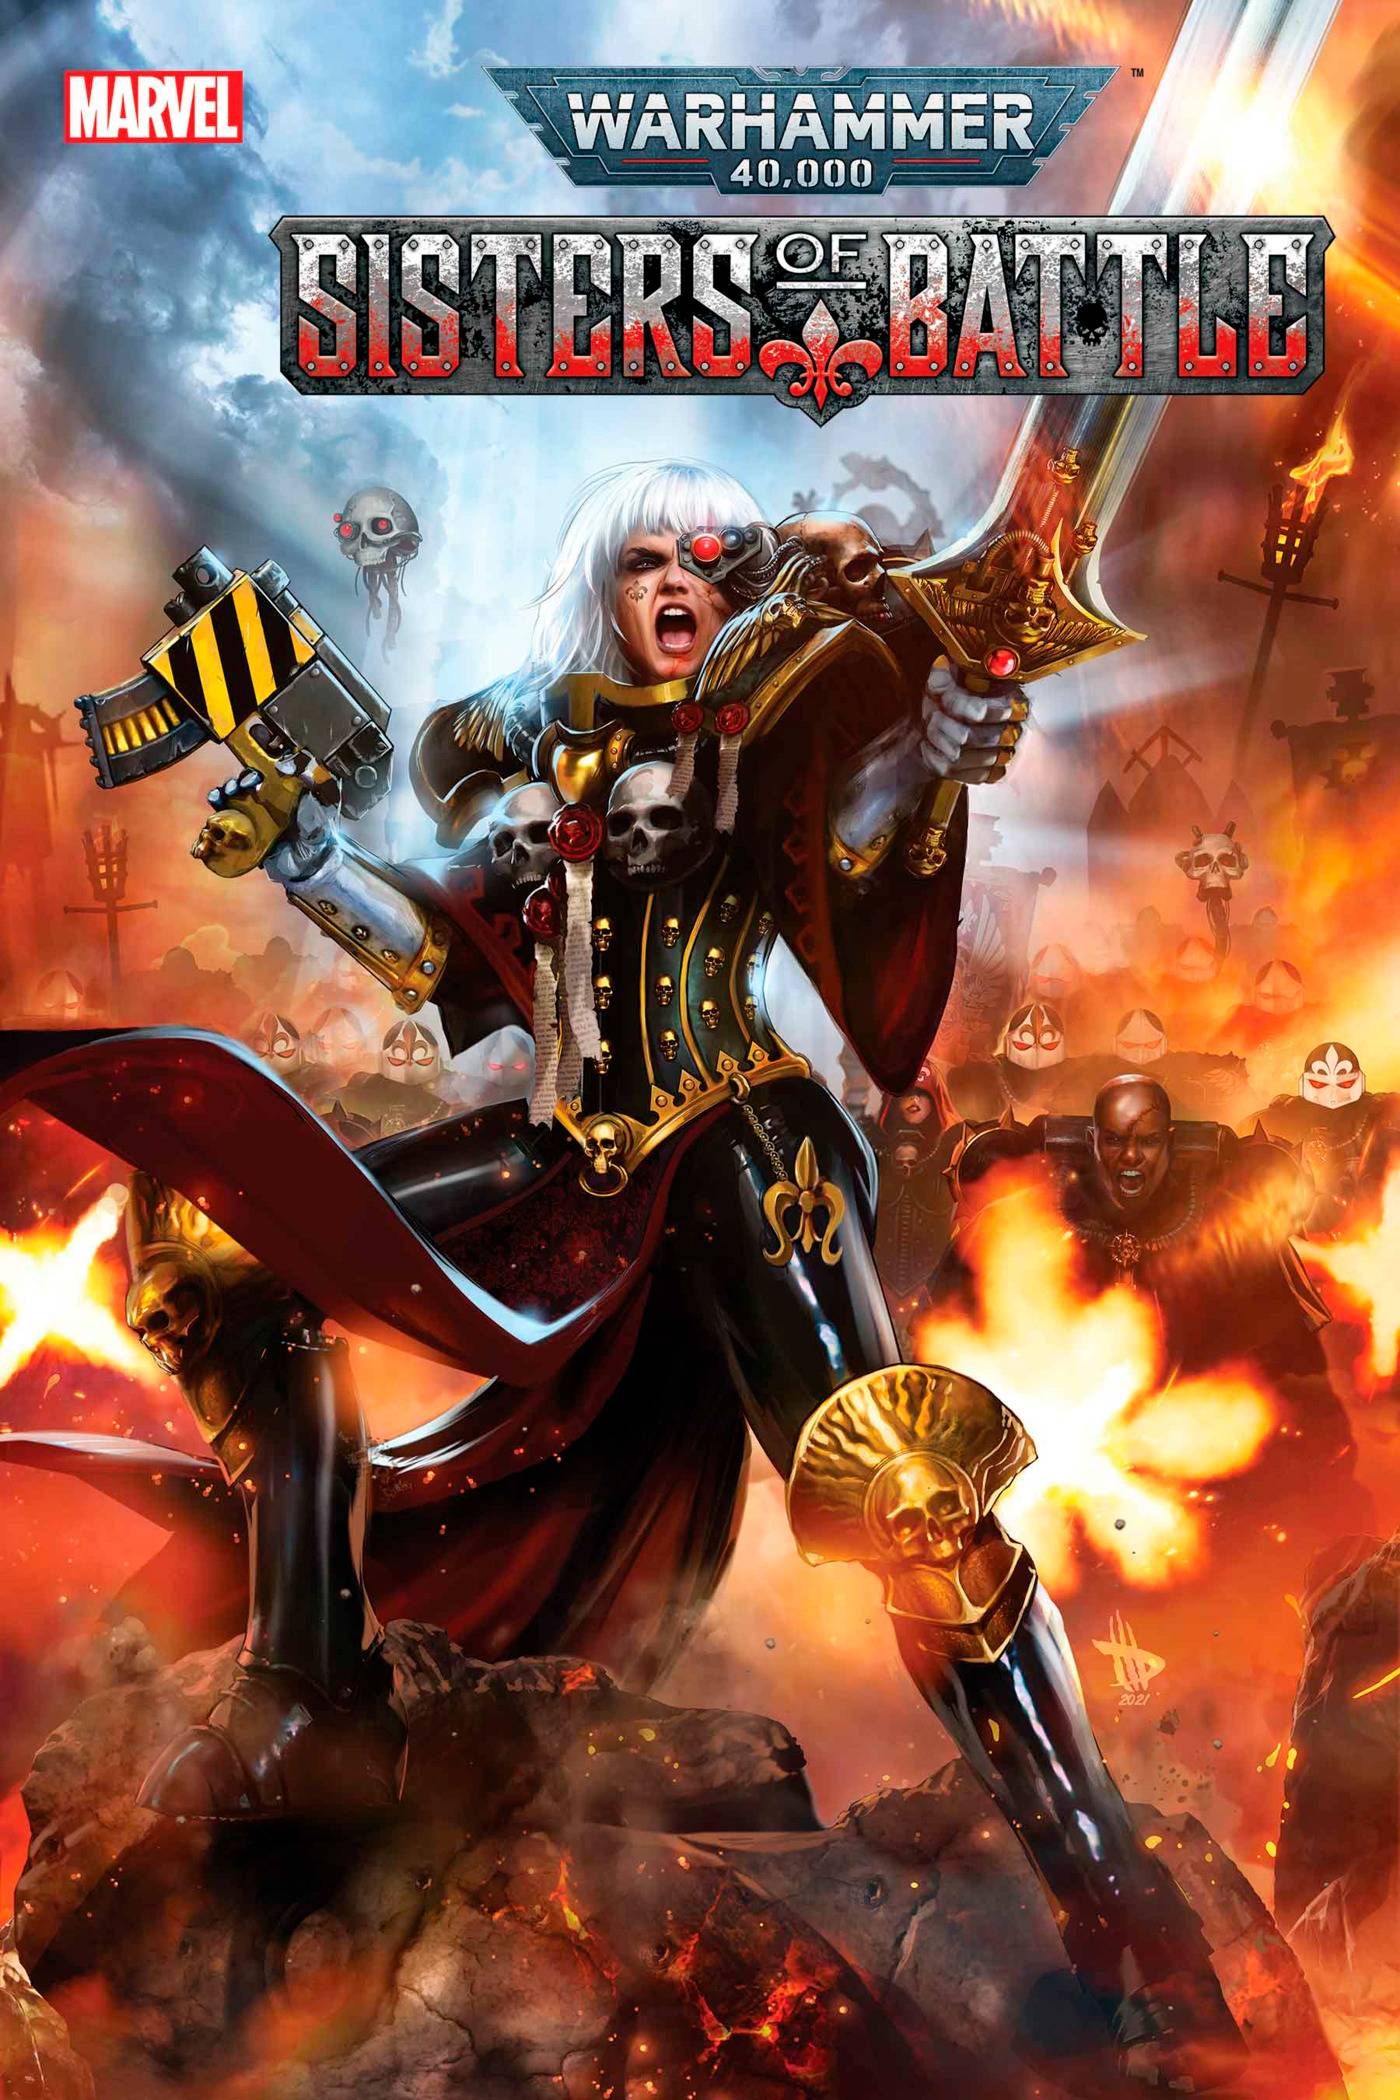 Warhammer 40,000: Sisters of Battle #5 Comic